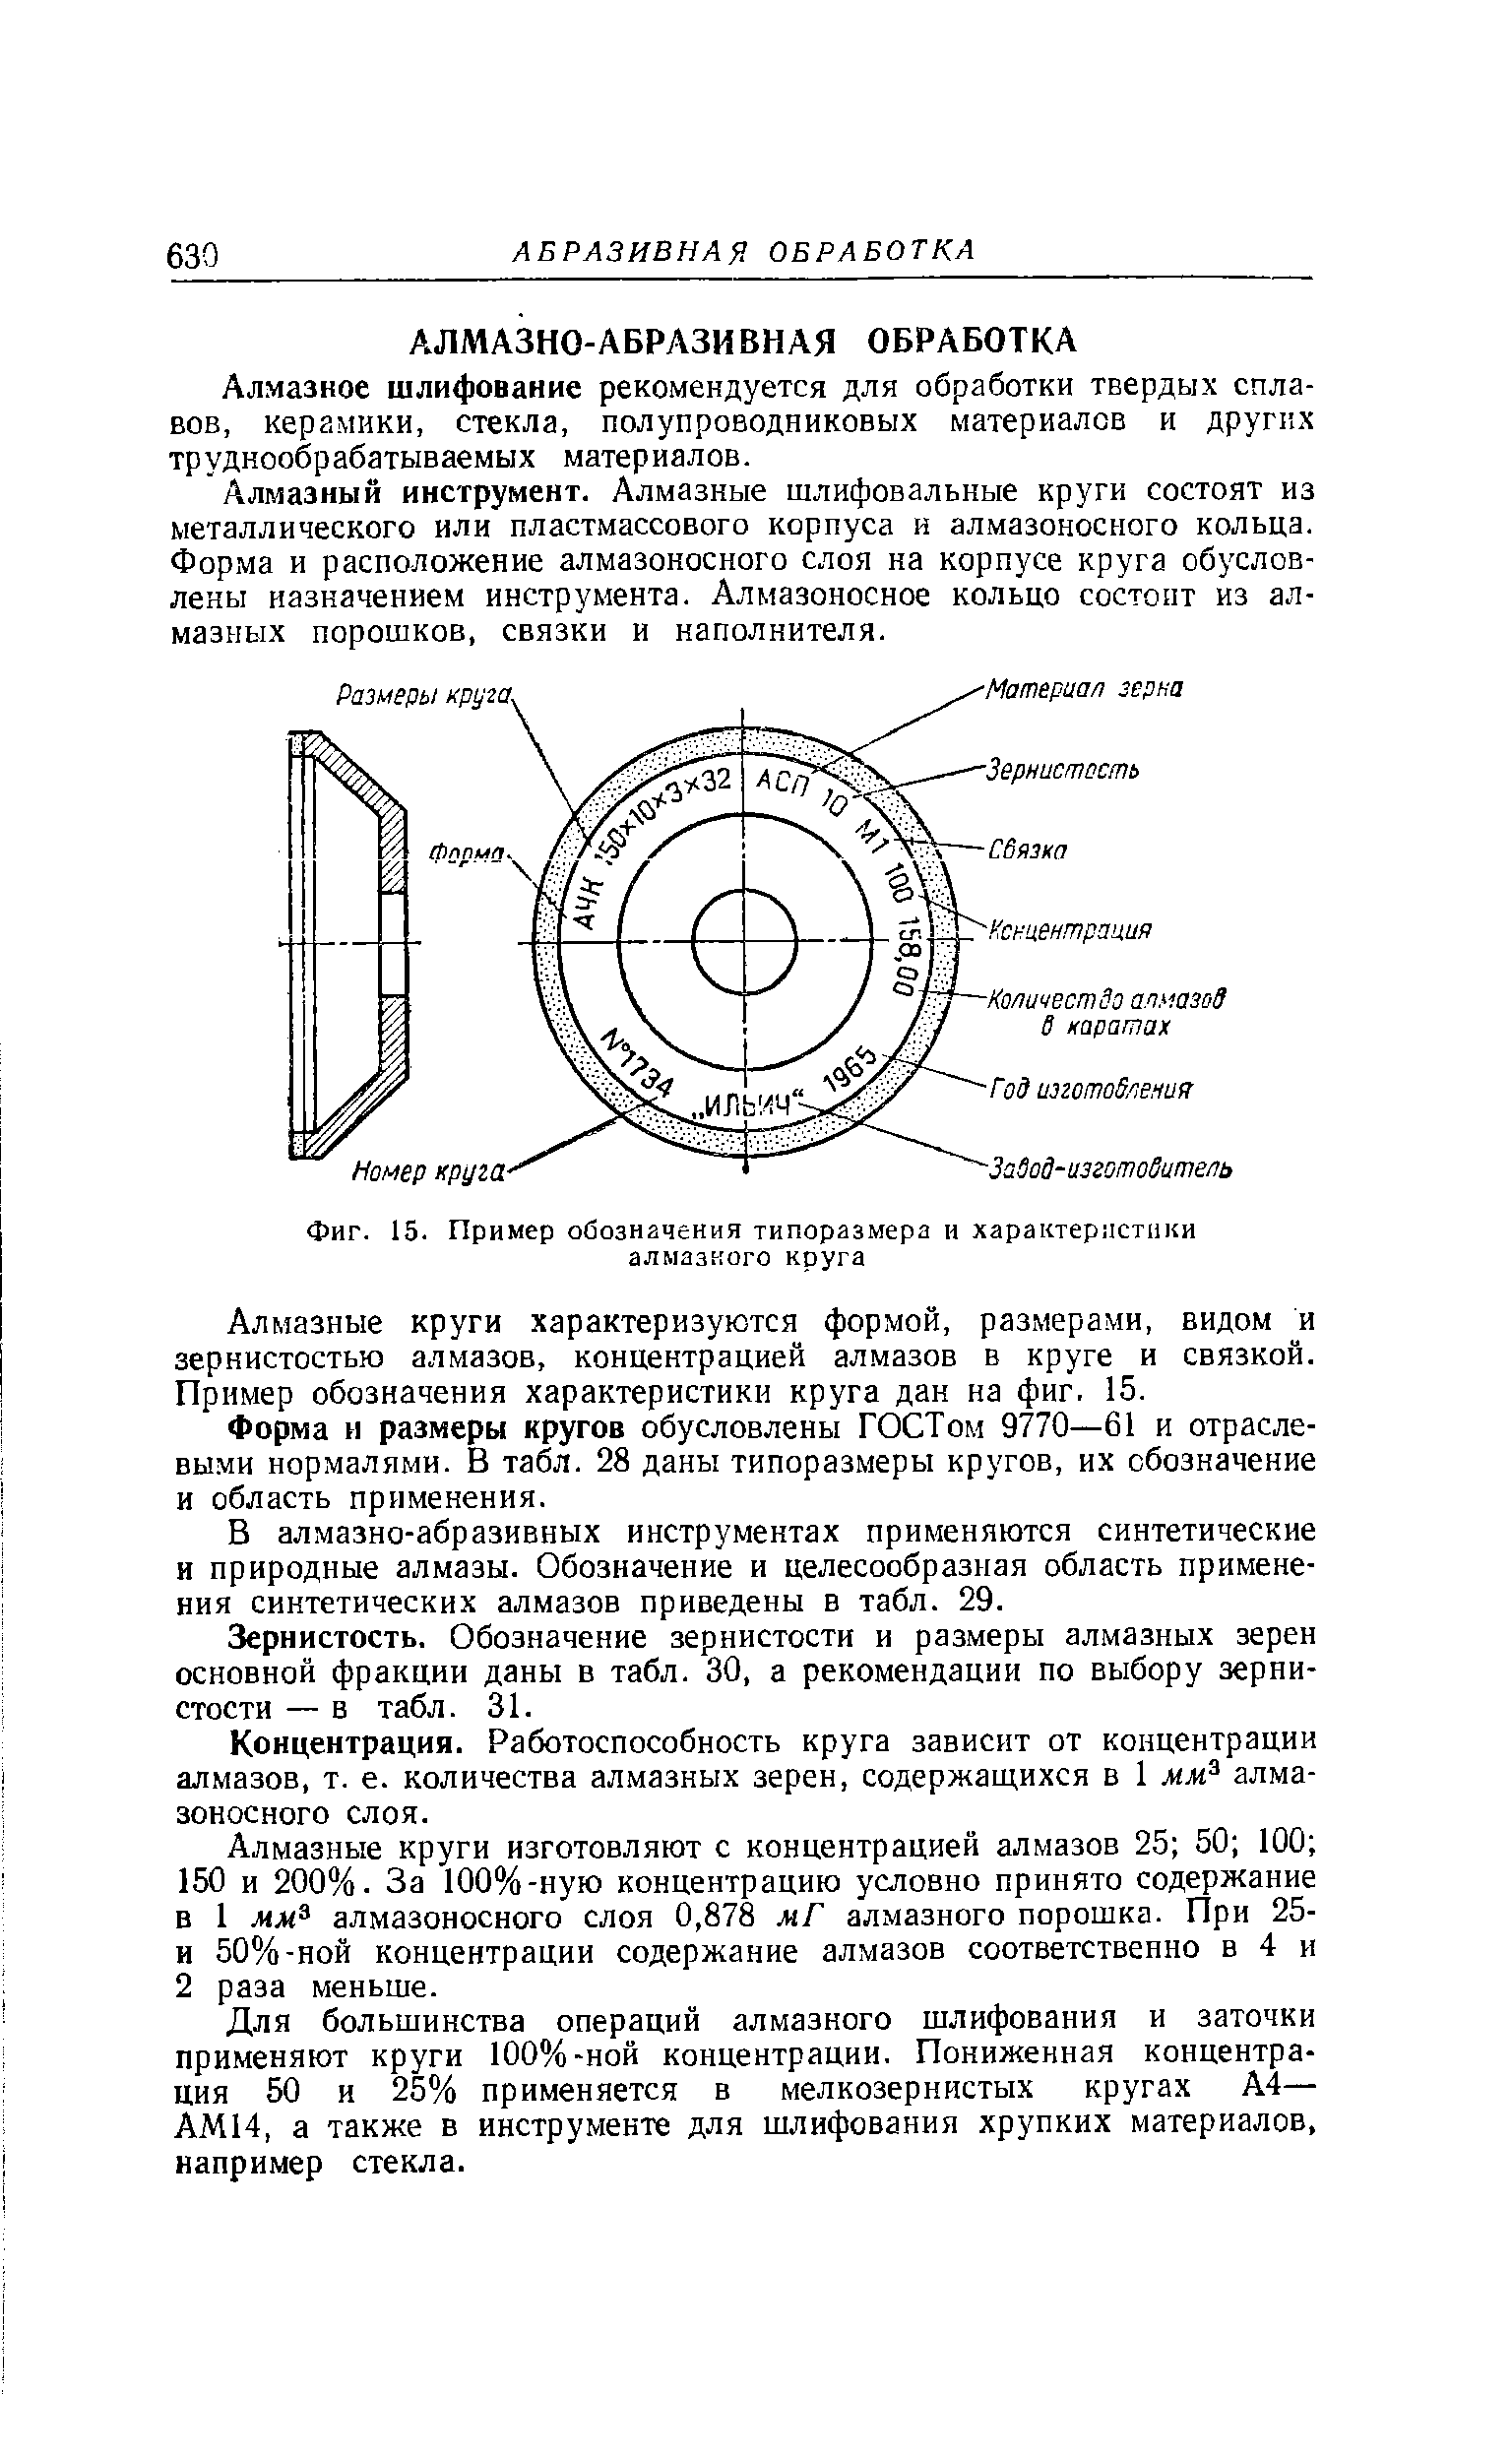 Фиг. 15. Пример обозначения типоразмера и характеристики алмазного круга
